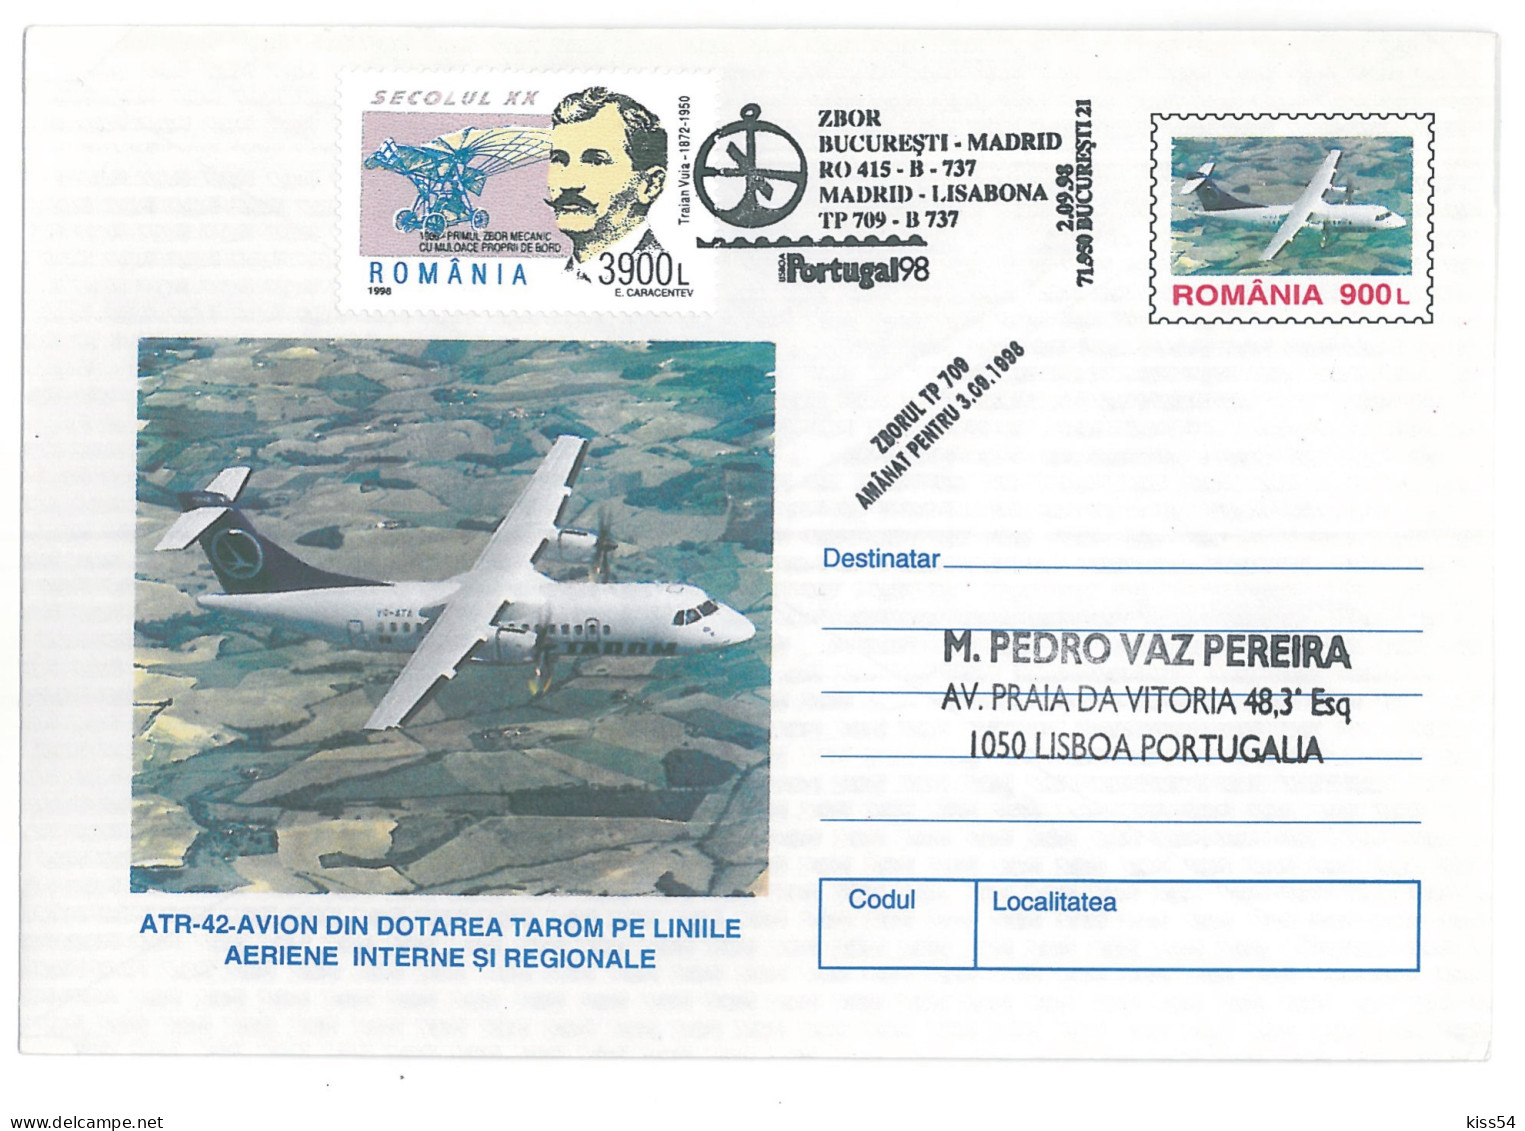 COV 75 - 303-a AIRPLANE, Flight, Bucuresti-Madrid-Lisabona, Romania, Spain, Portugal - Cover - Used - 1998 - Covers & Documents